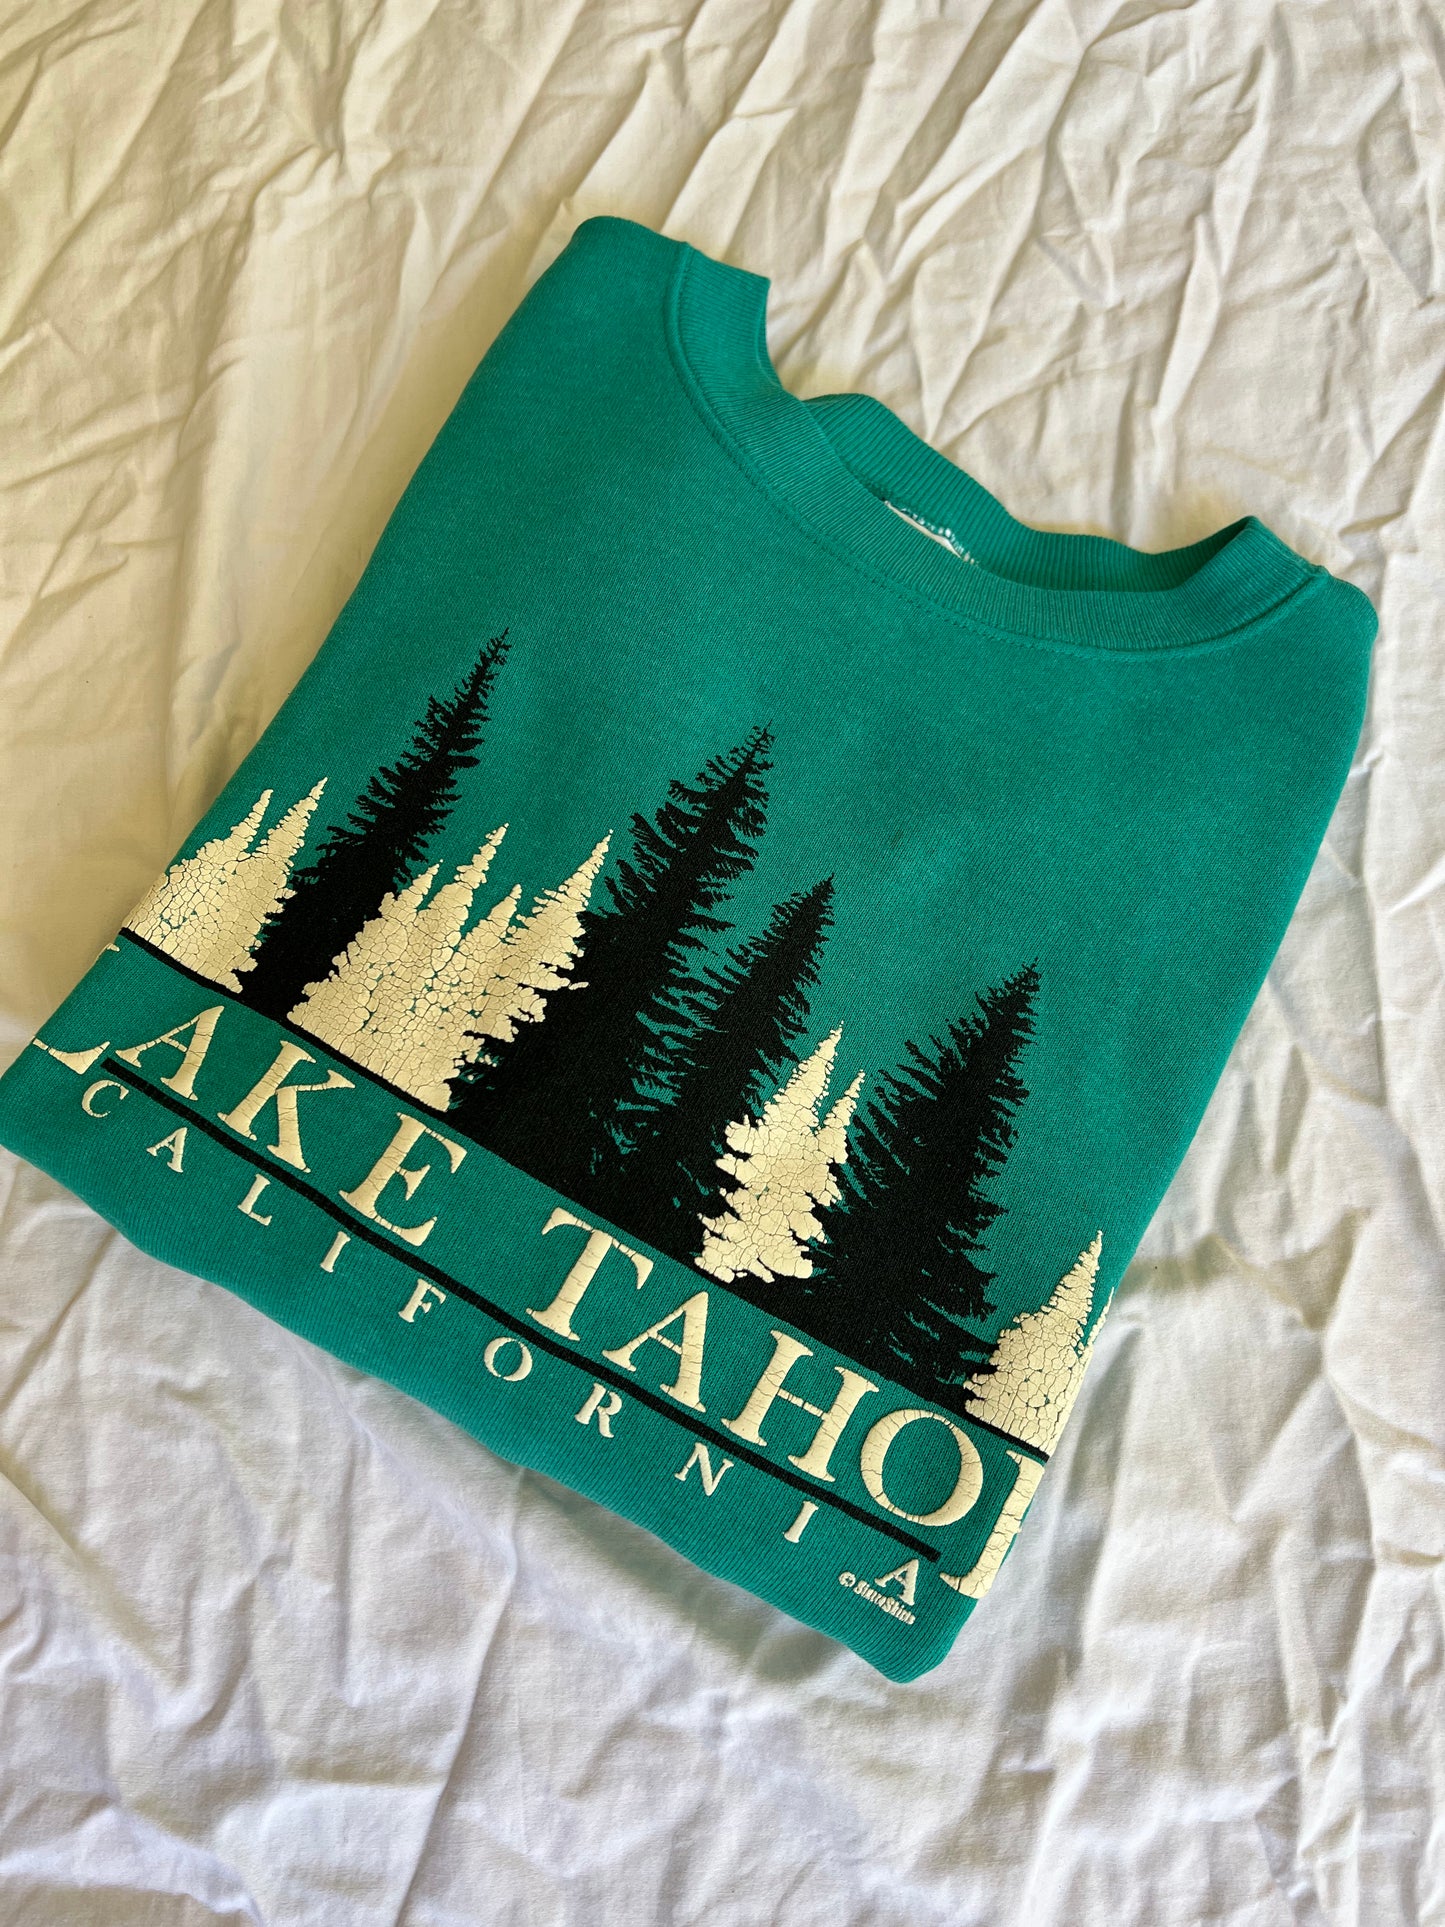 Vtg Lake Tahoe Sweatshirt